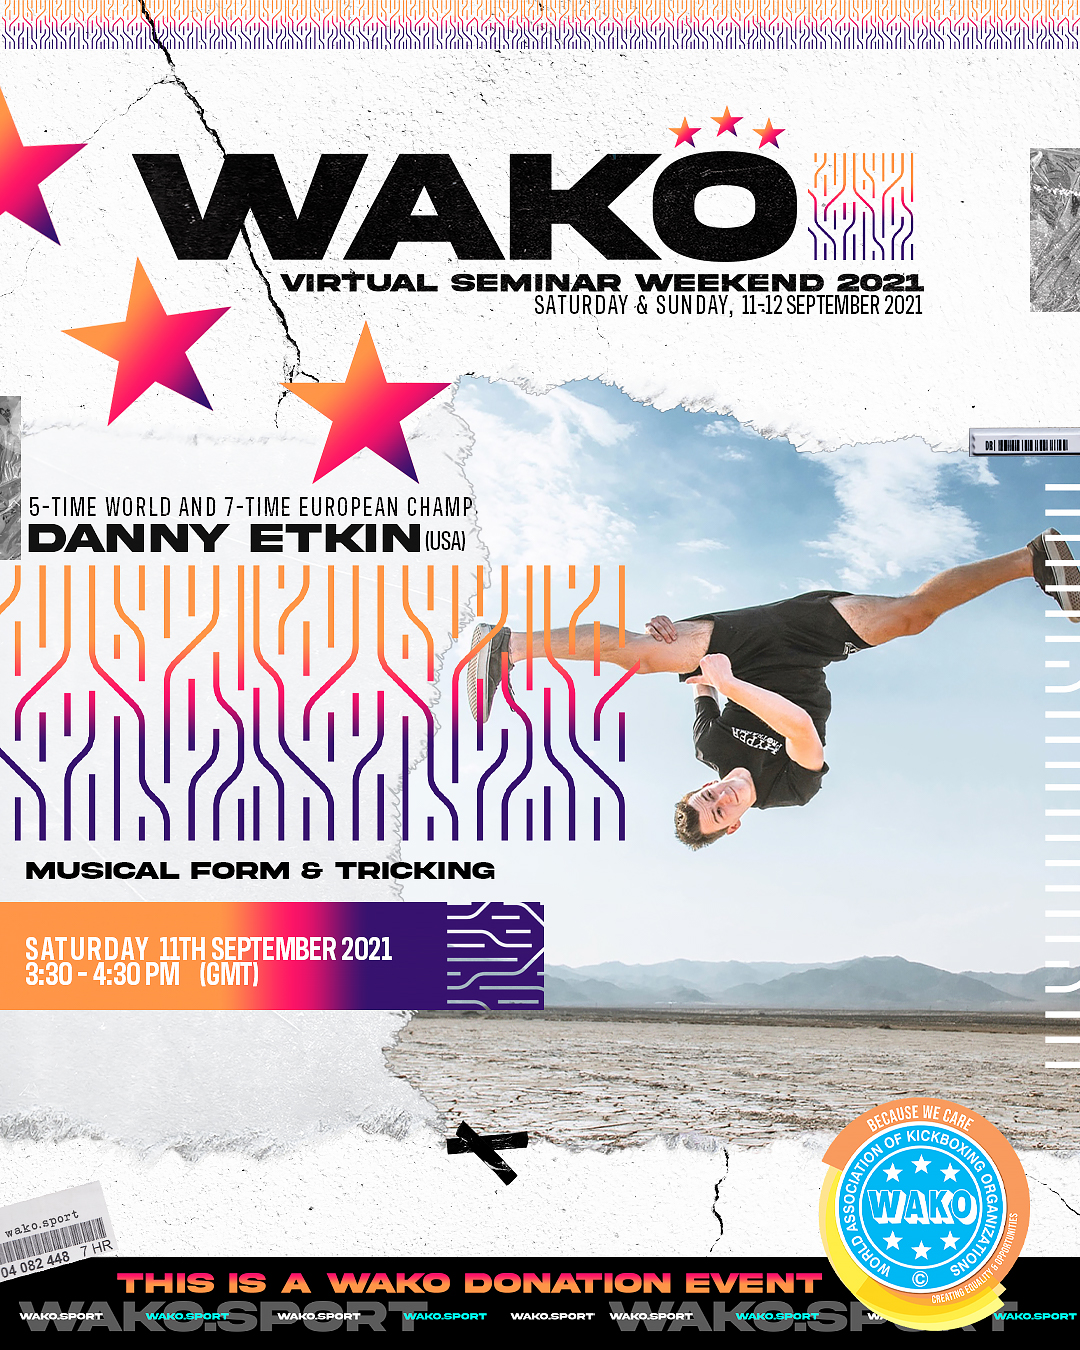 WAKO Virtual Seminar Weekend 2021 - 11 September 4:45-5:45 pm GMT - Musical Forms & Tricking - Danny Etkin (USA)